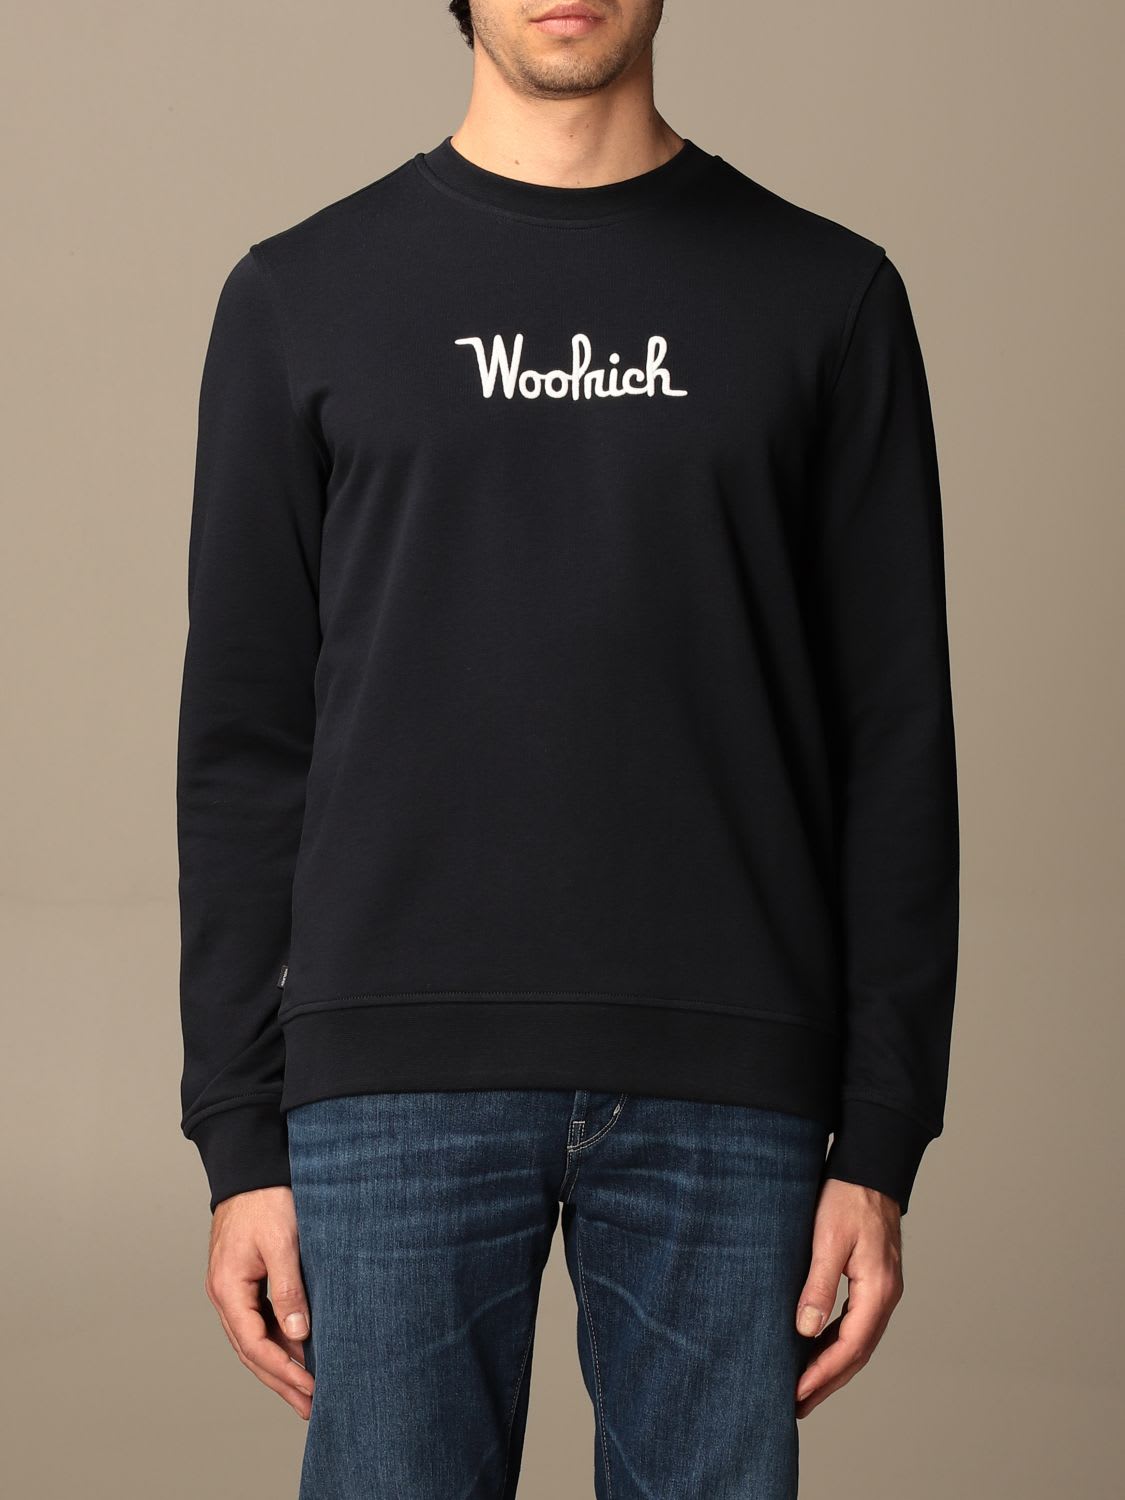 Woolrich sweatshirt Woolrich crewneck sweatshirt with logo